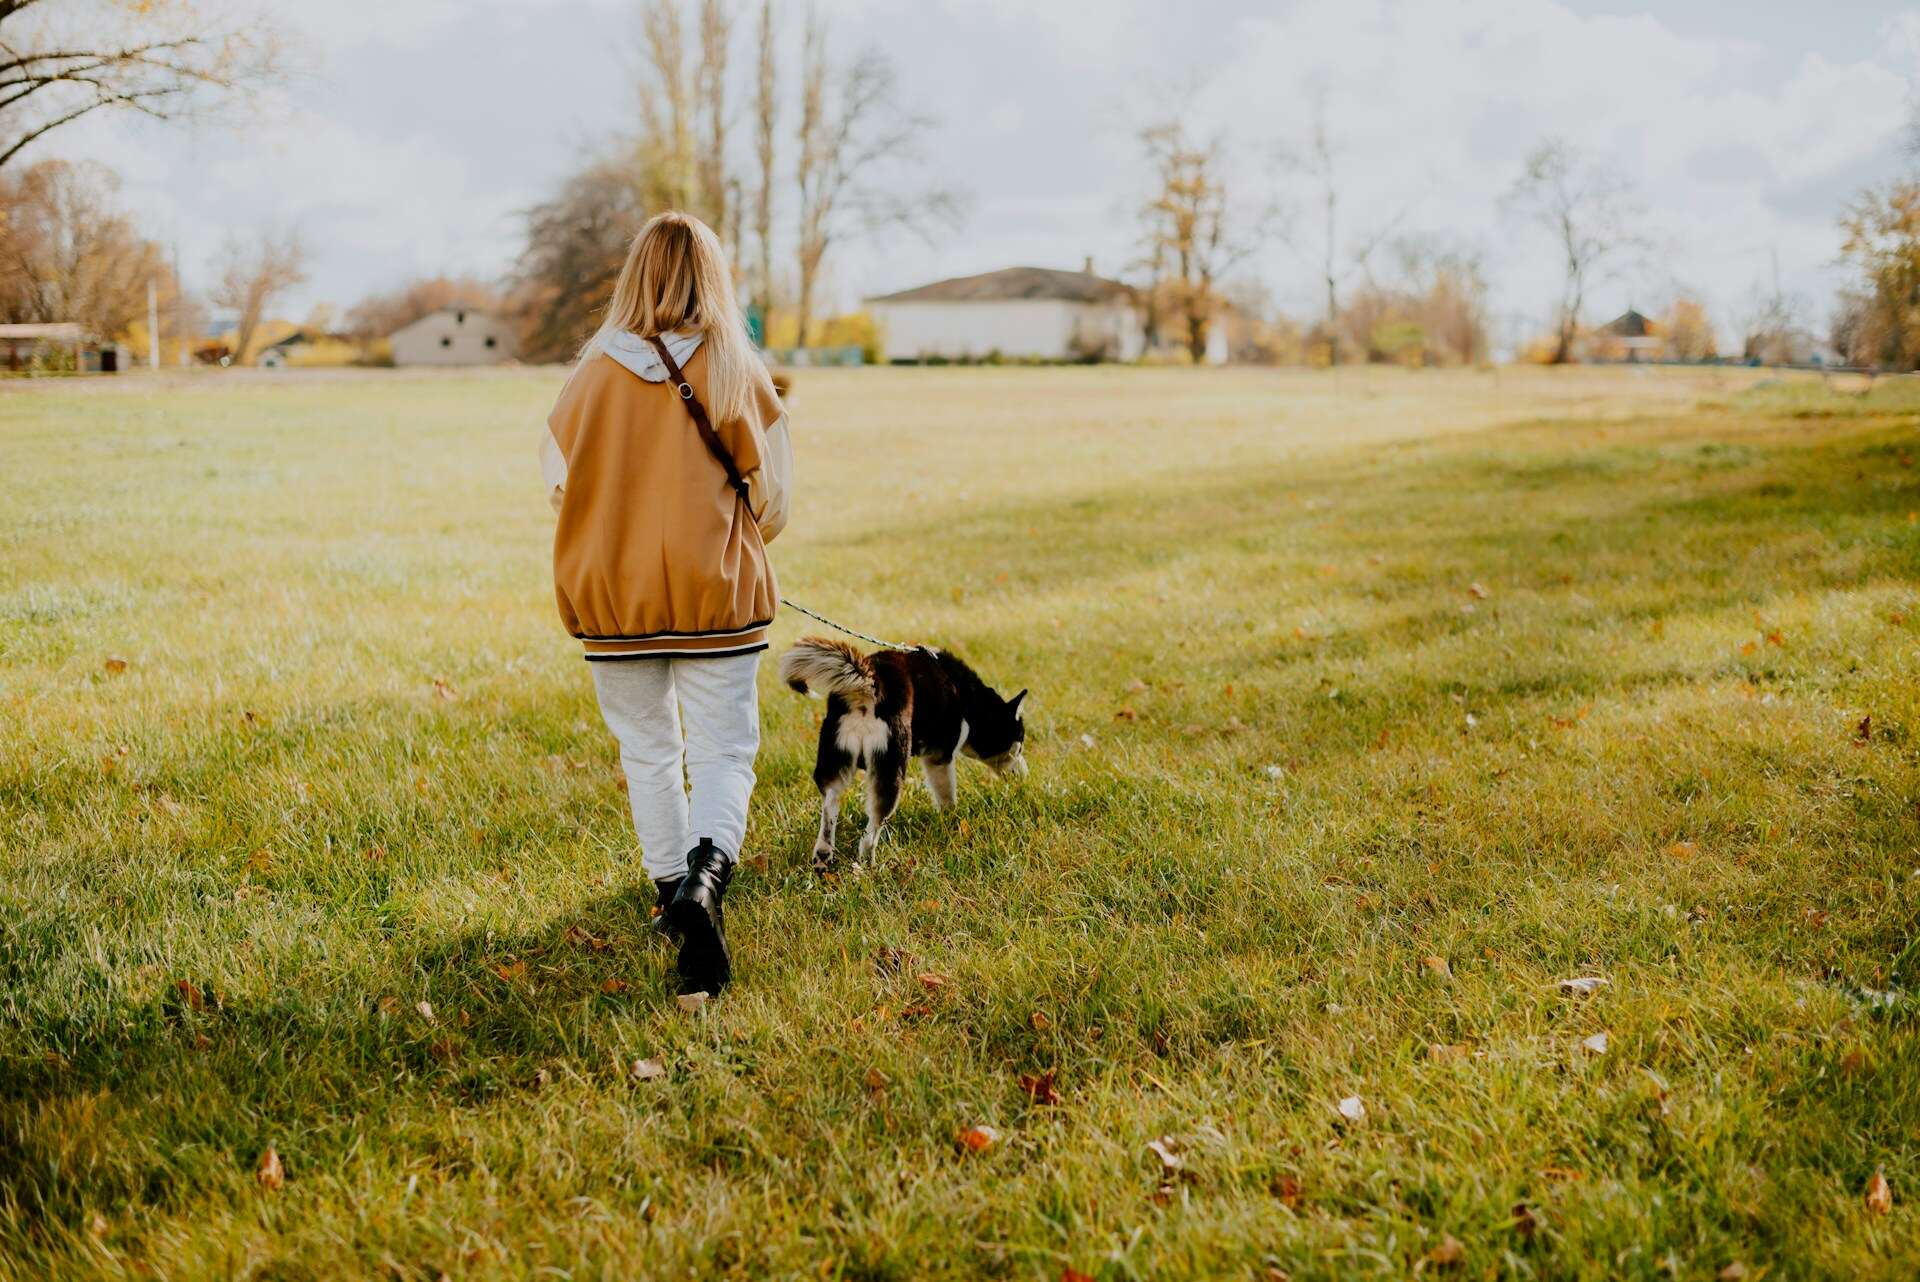 A woman walking her dog in a grassy field